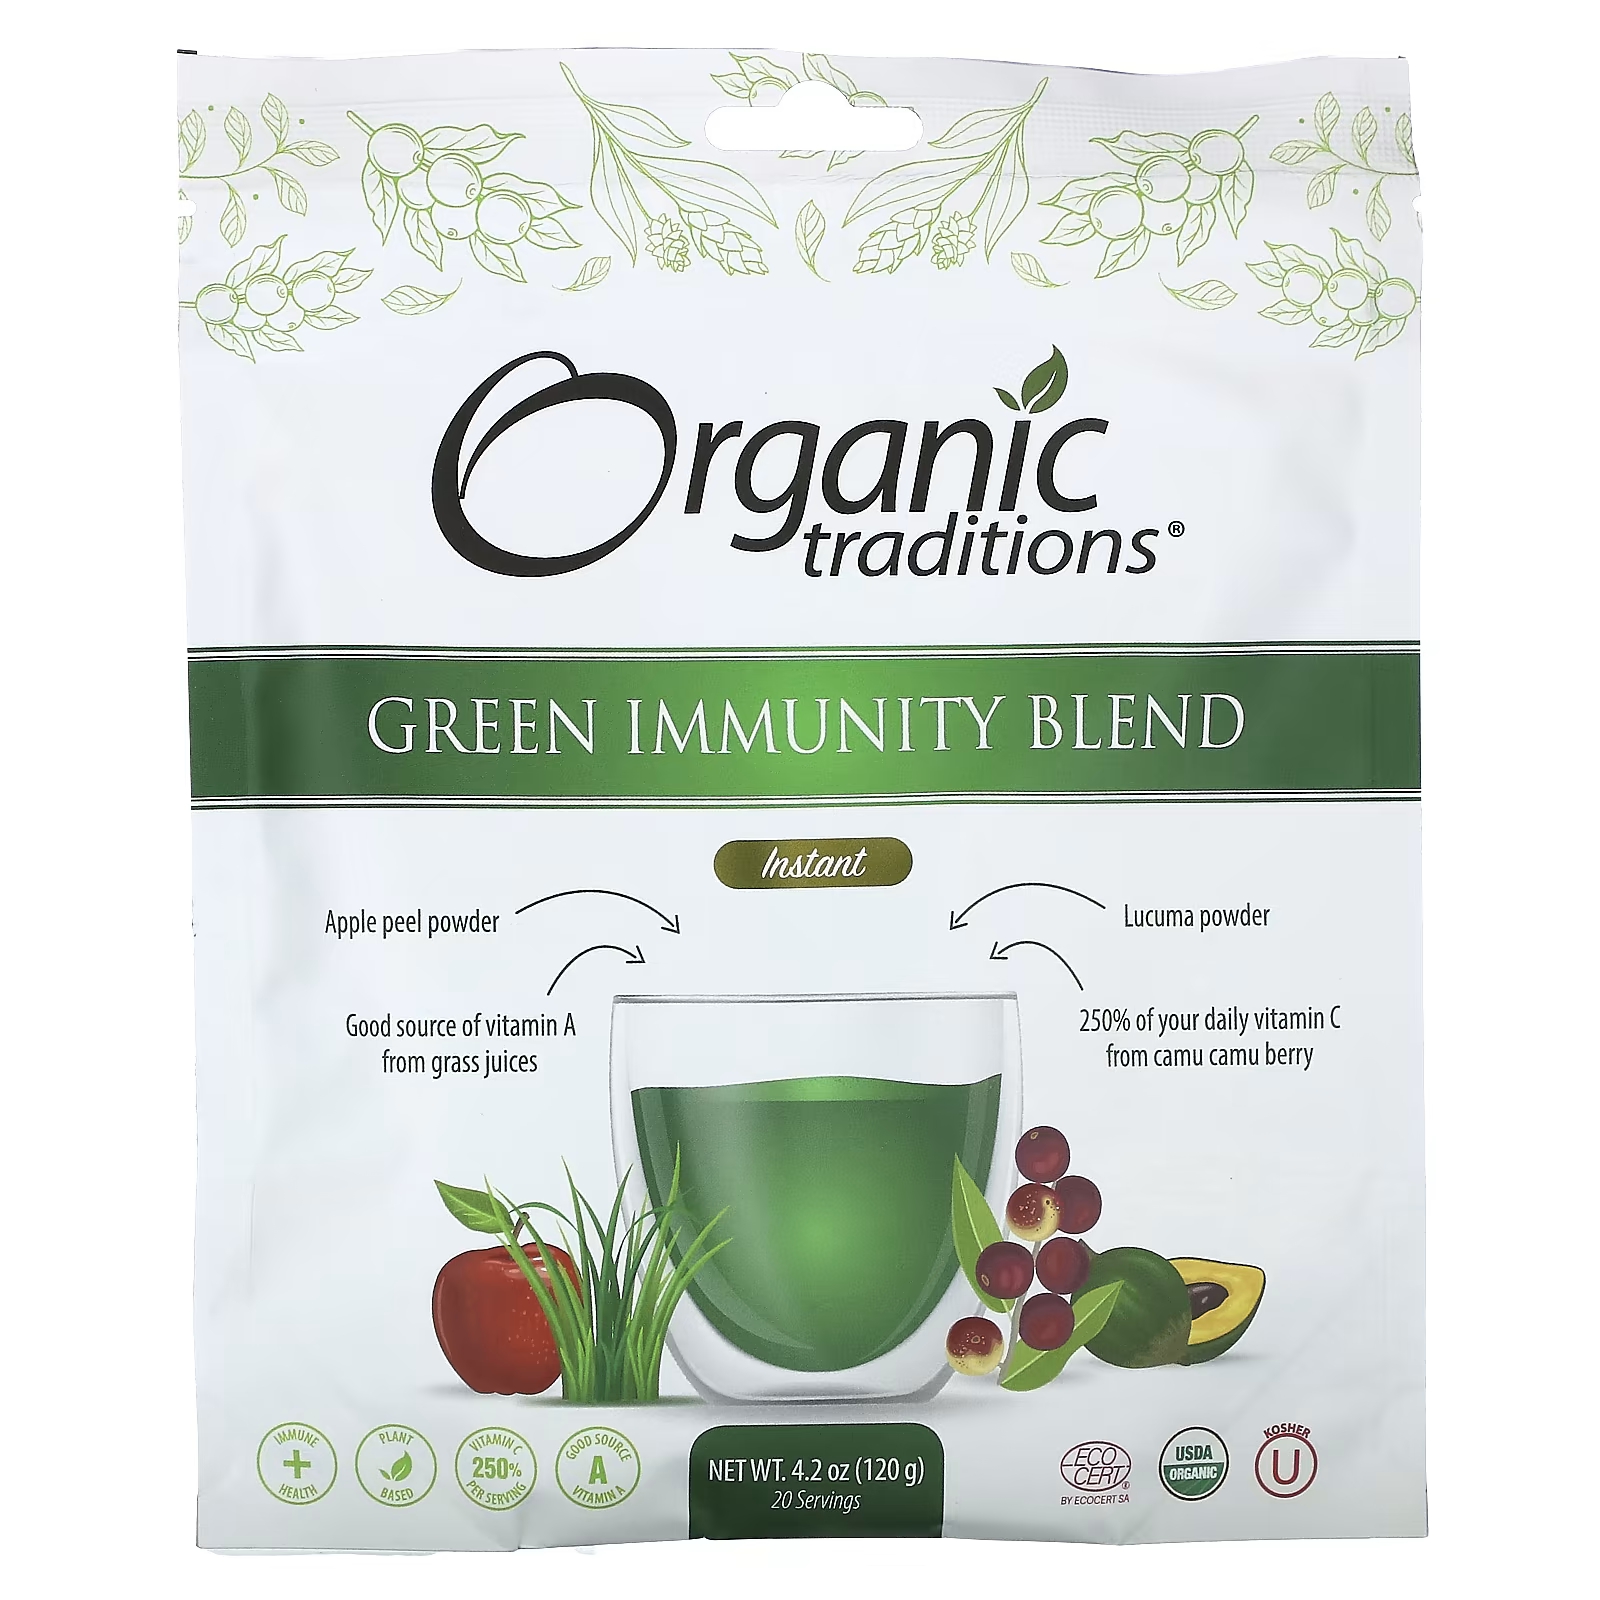 Смесь Organic Traditions Green Immunity Instant для иммунитета, 120 г bioschwartz natural immunity натуральная смесь для иммунитета 162 г 5 7 унции